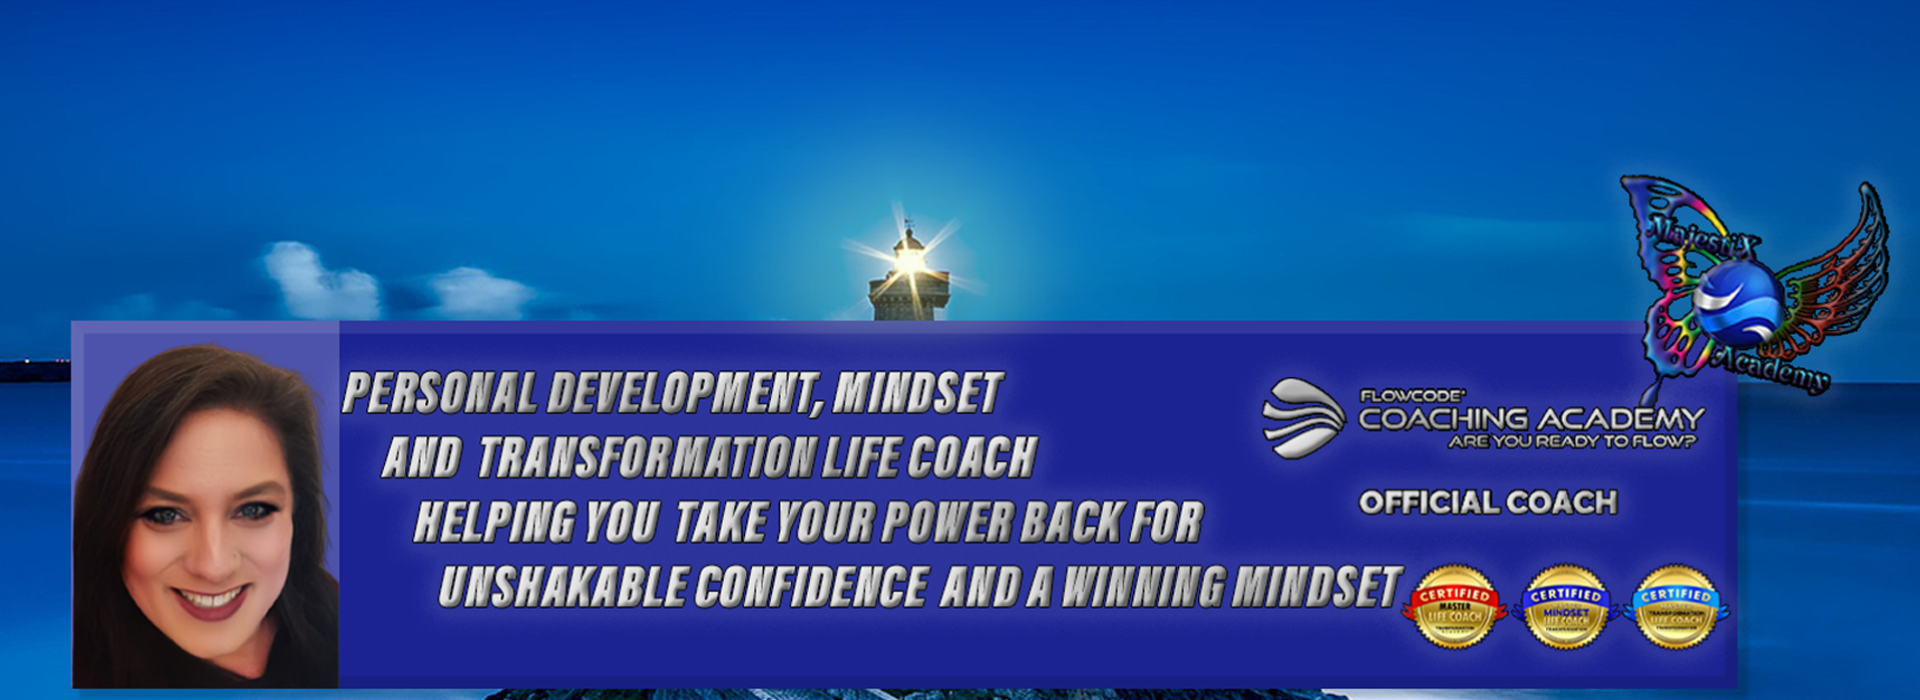 Linda Pretorius personal development and transformation life coach